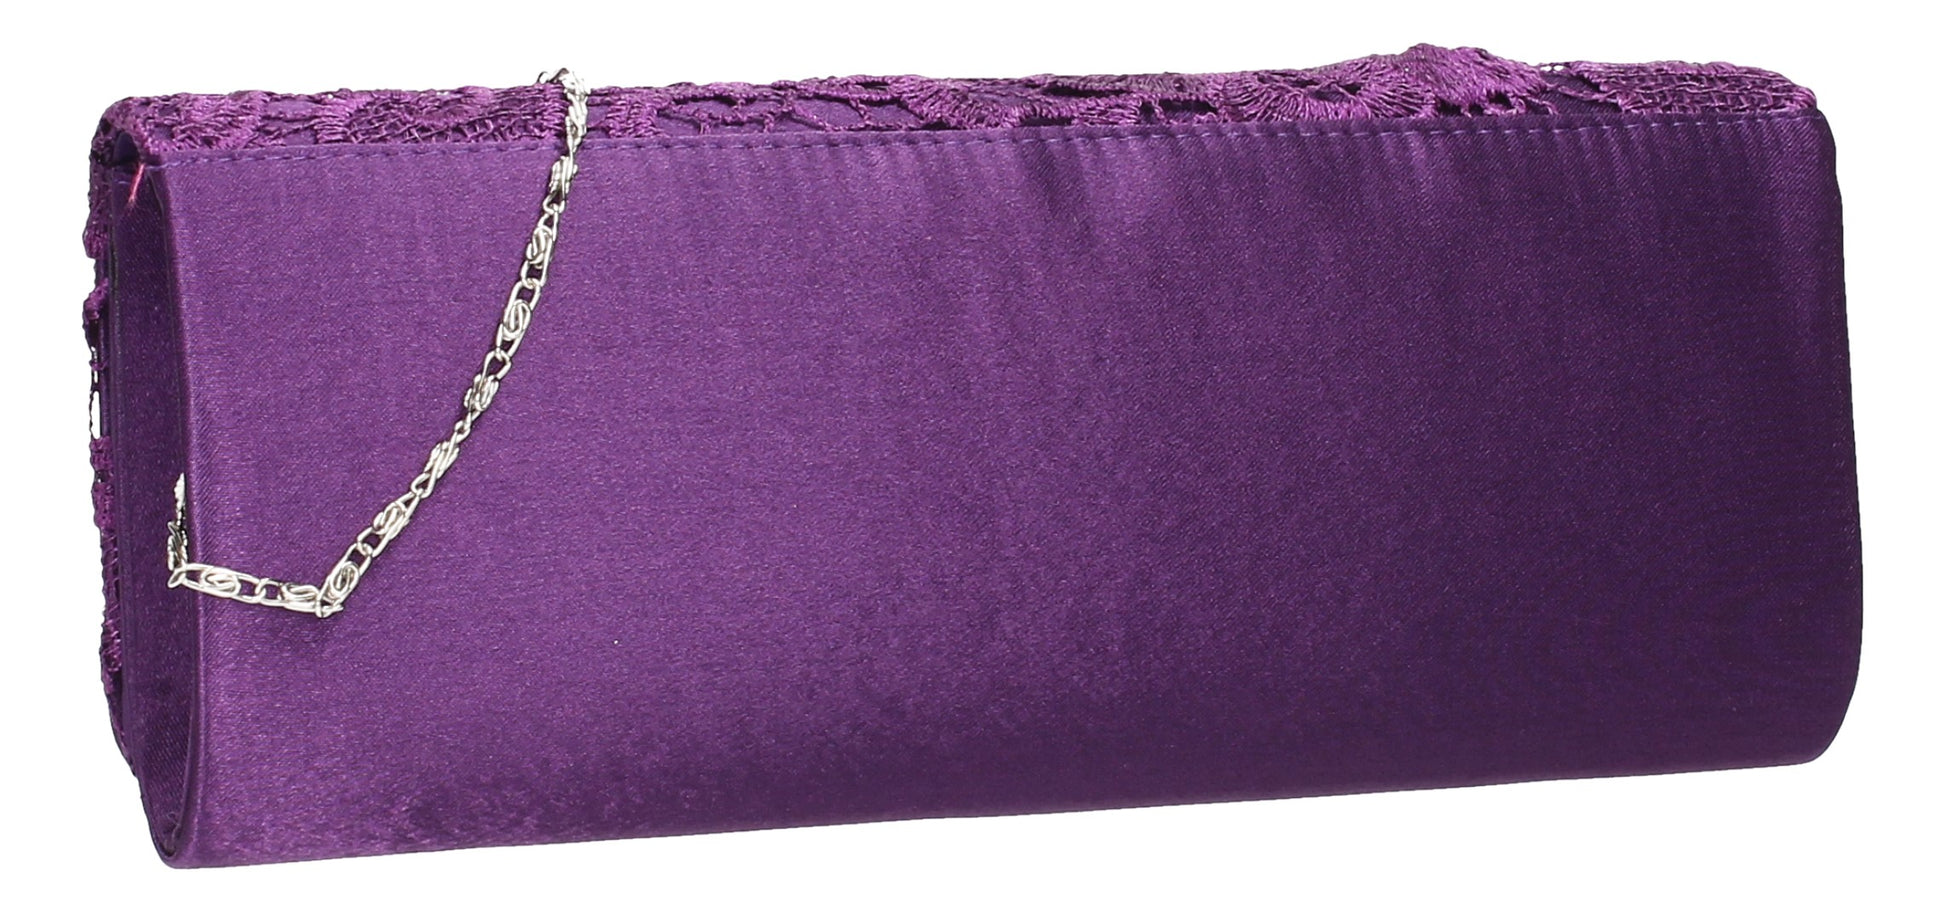 SWANKYSWANS Kelly Lace Clutch Bag Purple Cute Cheap Clutch Bag For Weddings School and Work